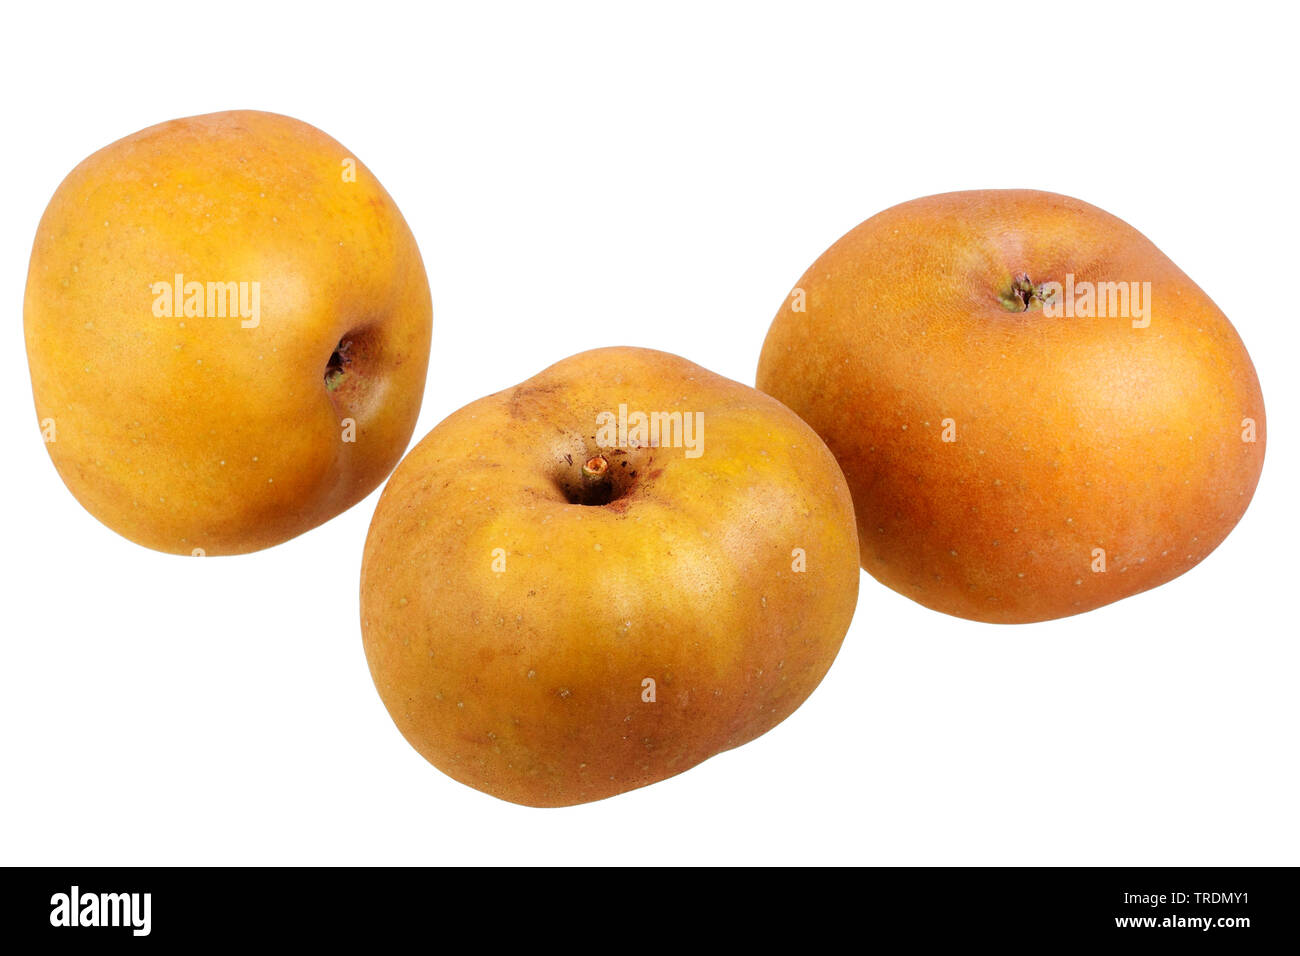 apple (Malus domestica 'Graue Kanadarenette', Malus domestica Graue Kanadarenette), apples of the cultivar Graue Kanadarenette Stock Photo